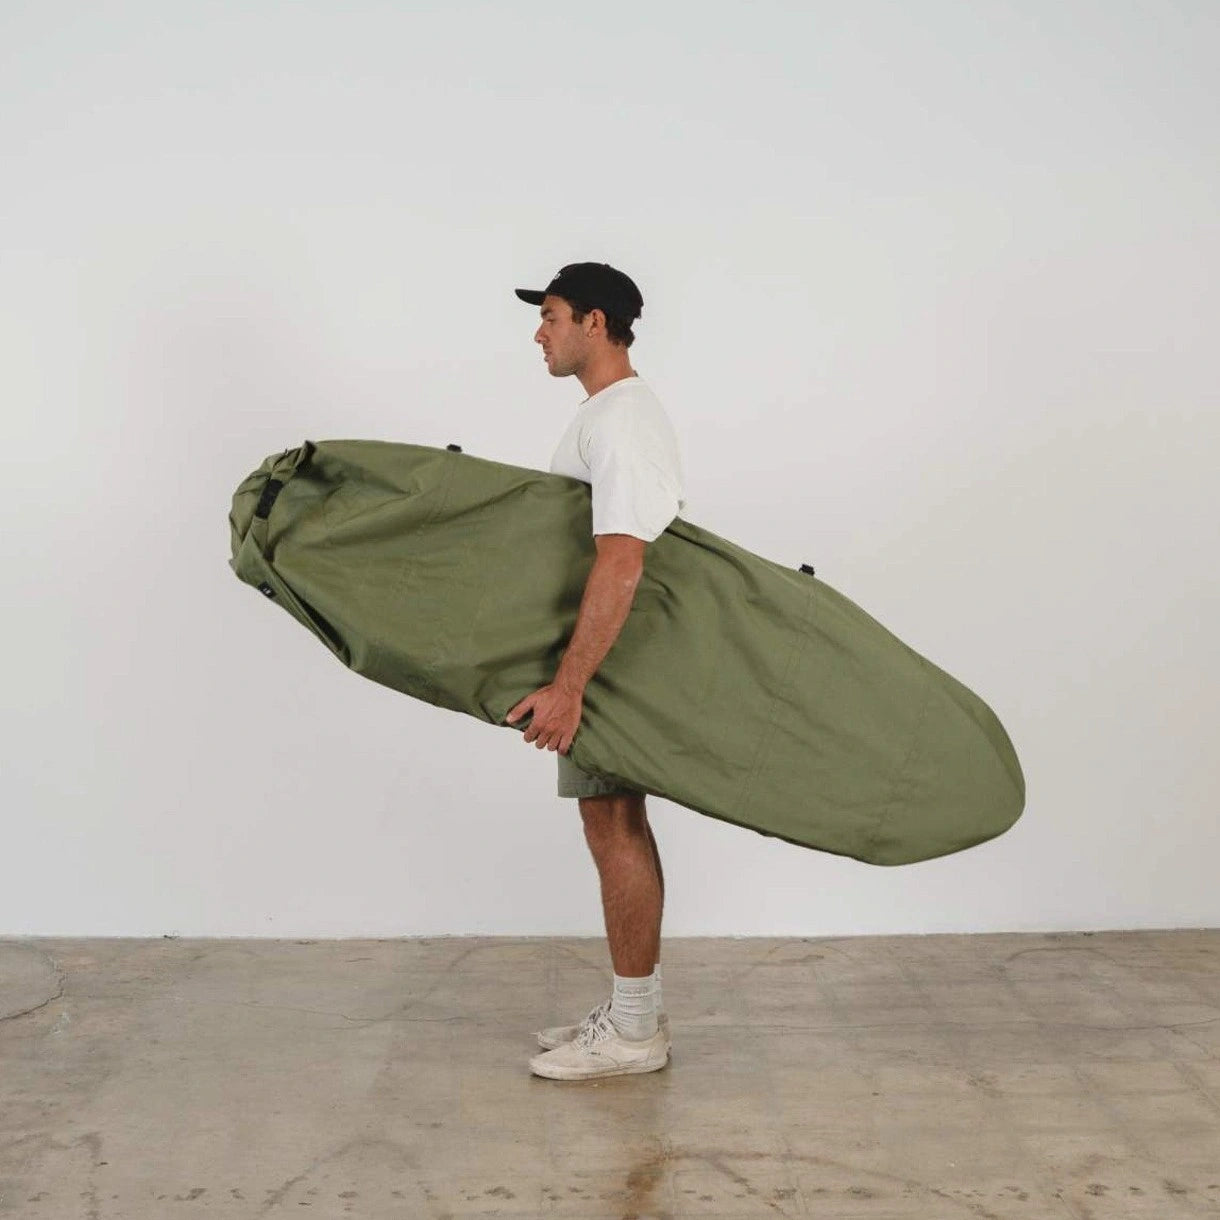 6ft canvas surfboard bag